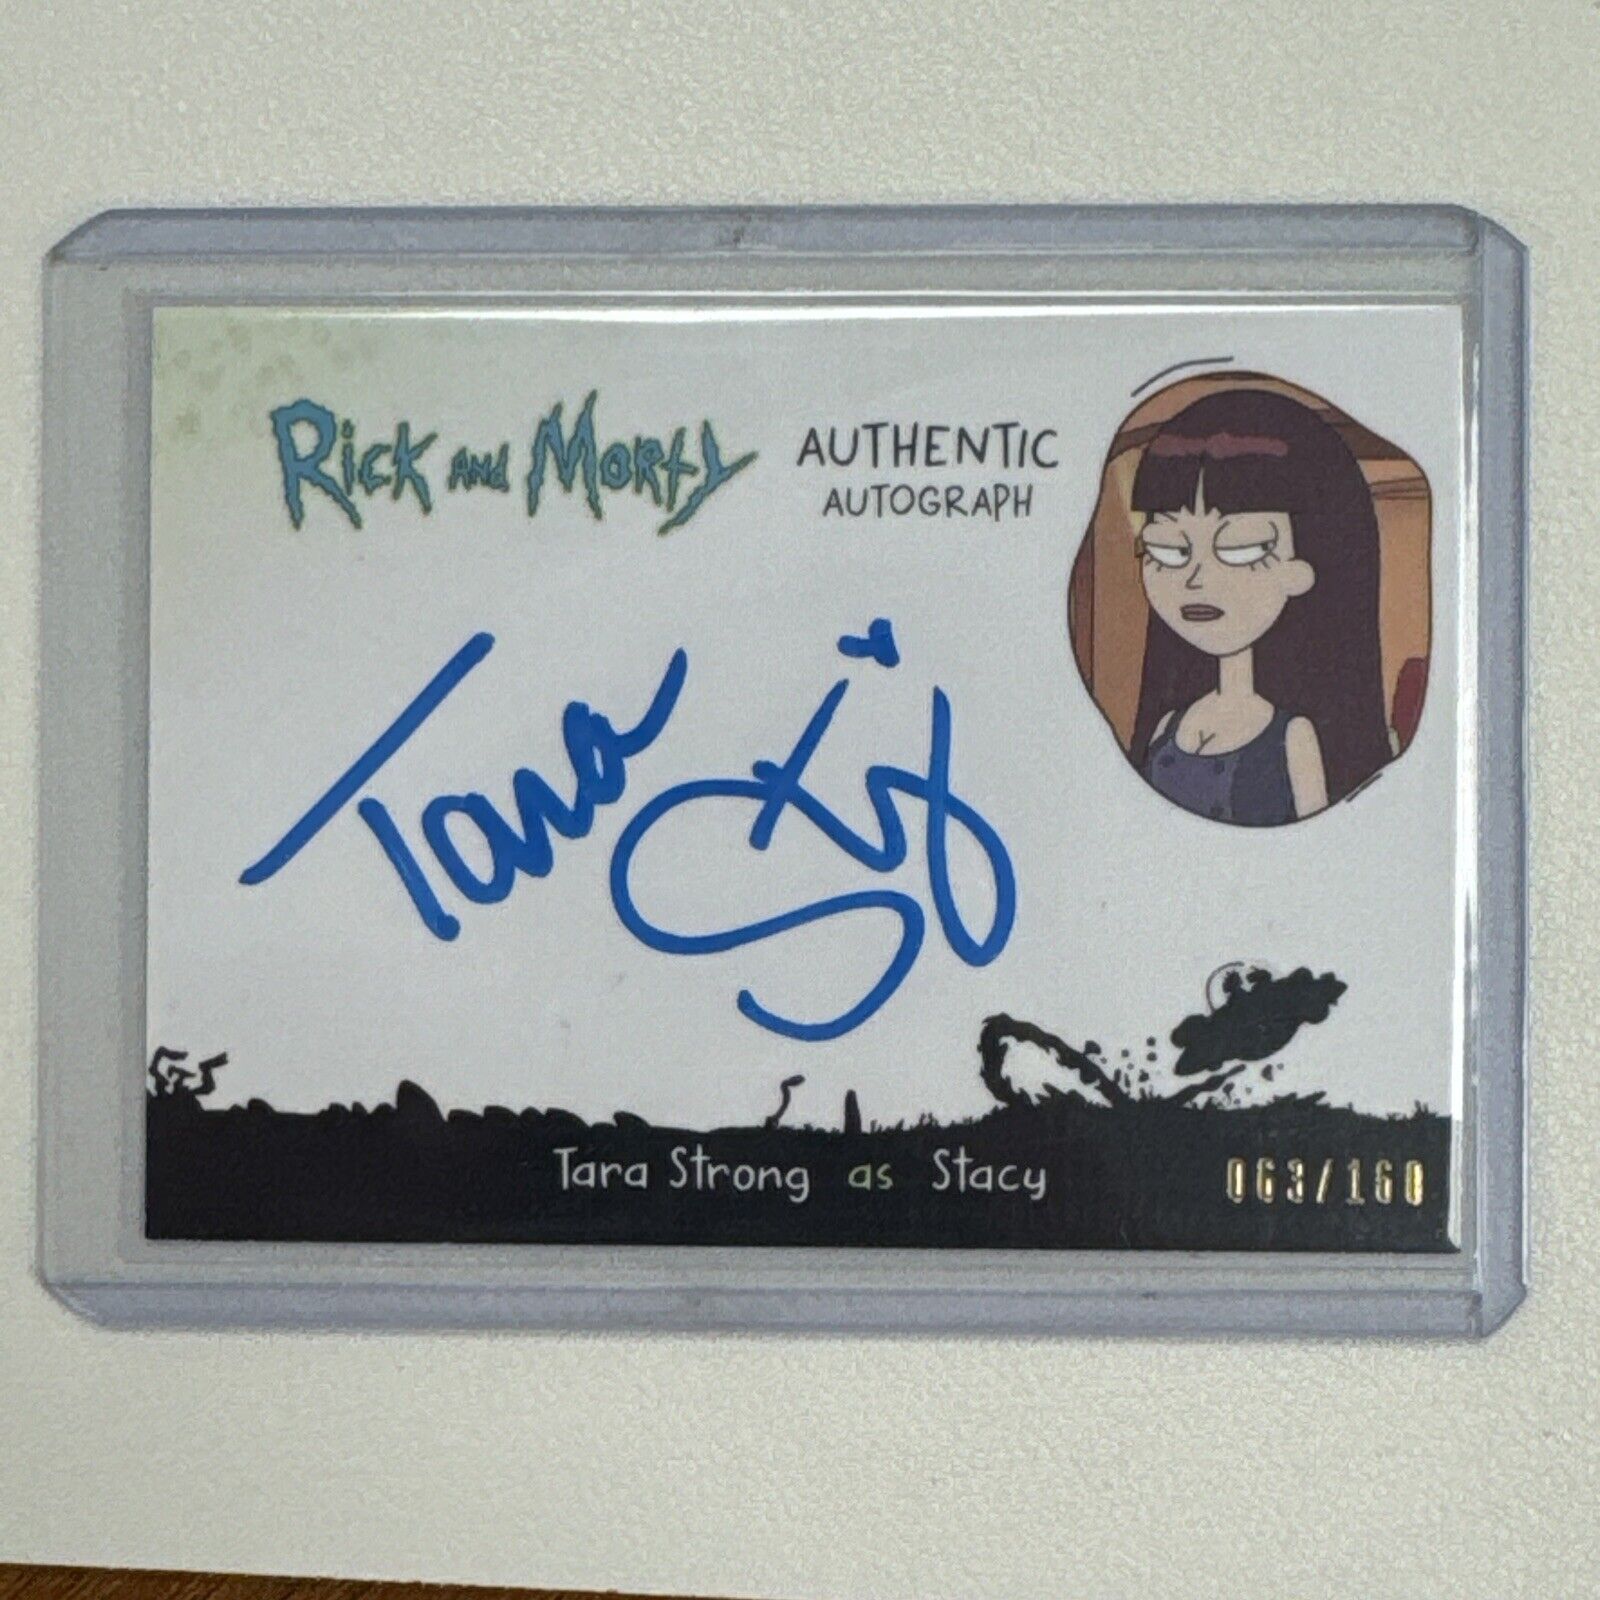 Tara Strong “Stacy” Rick & Morty Cryptozoic  Auto Autograph Card #063/160